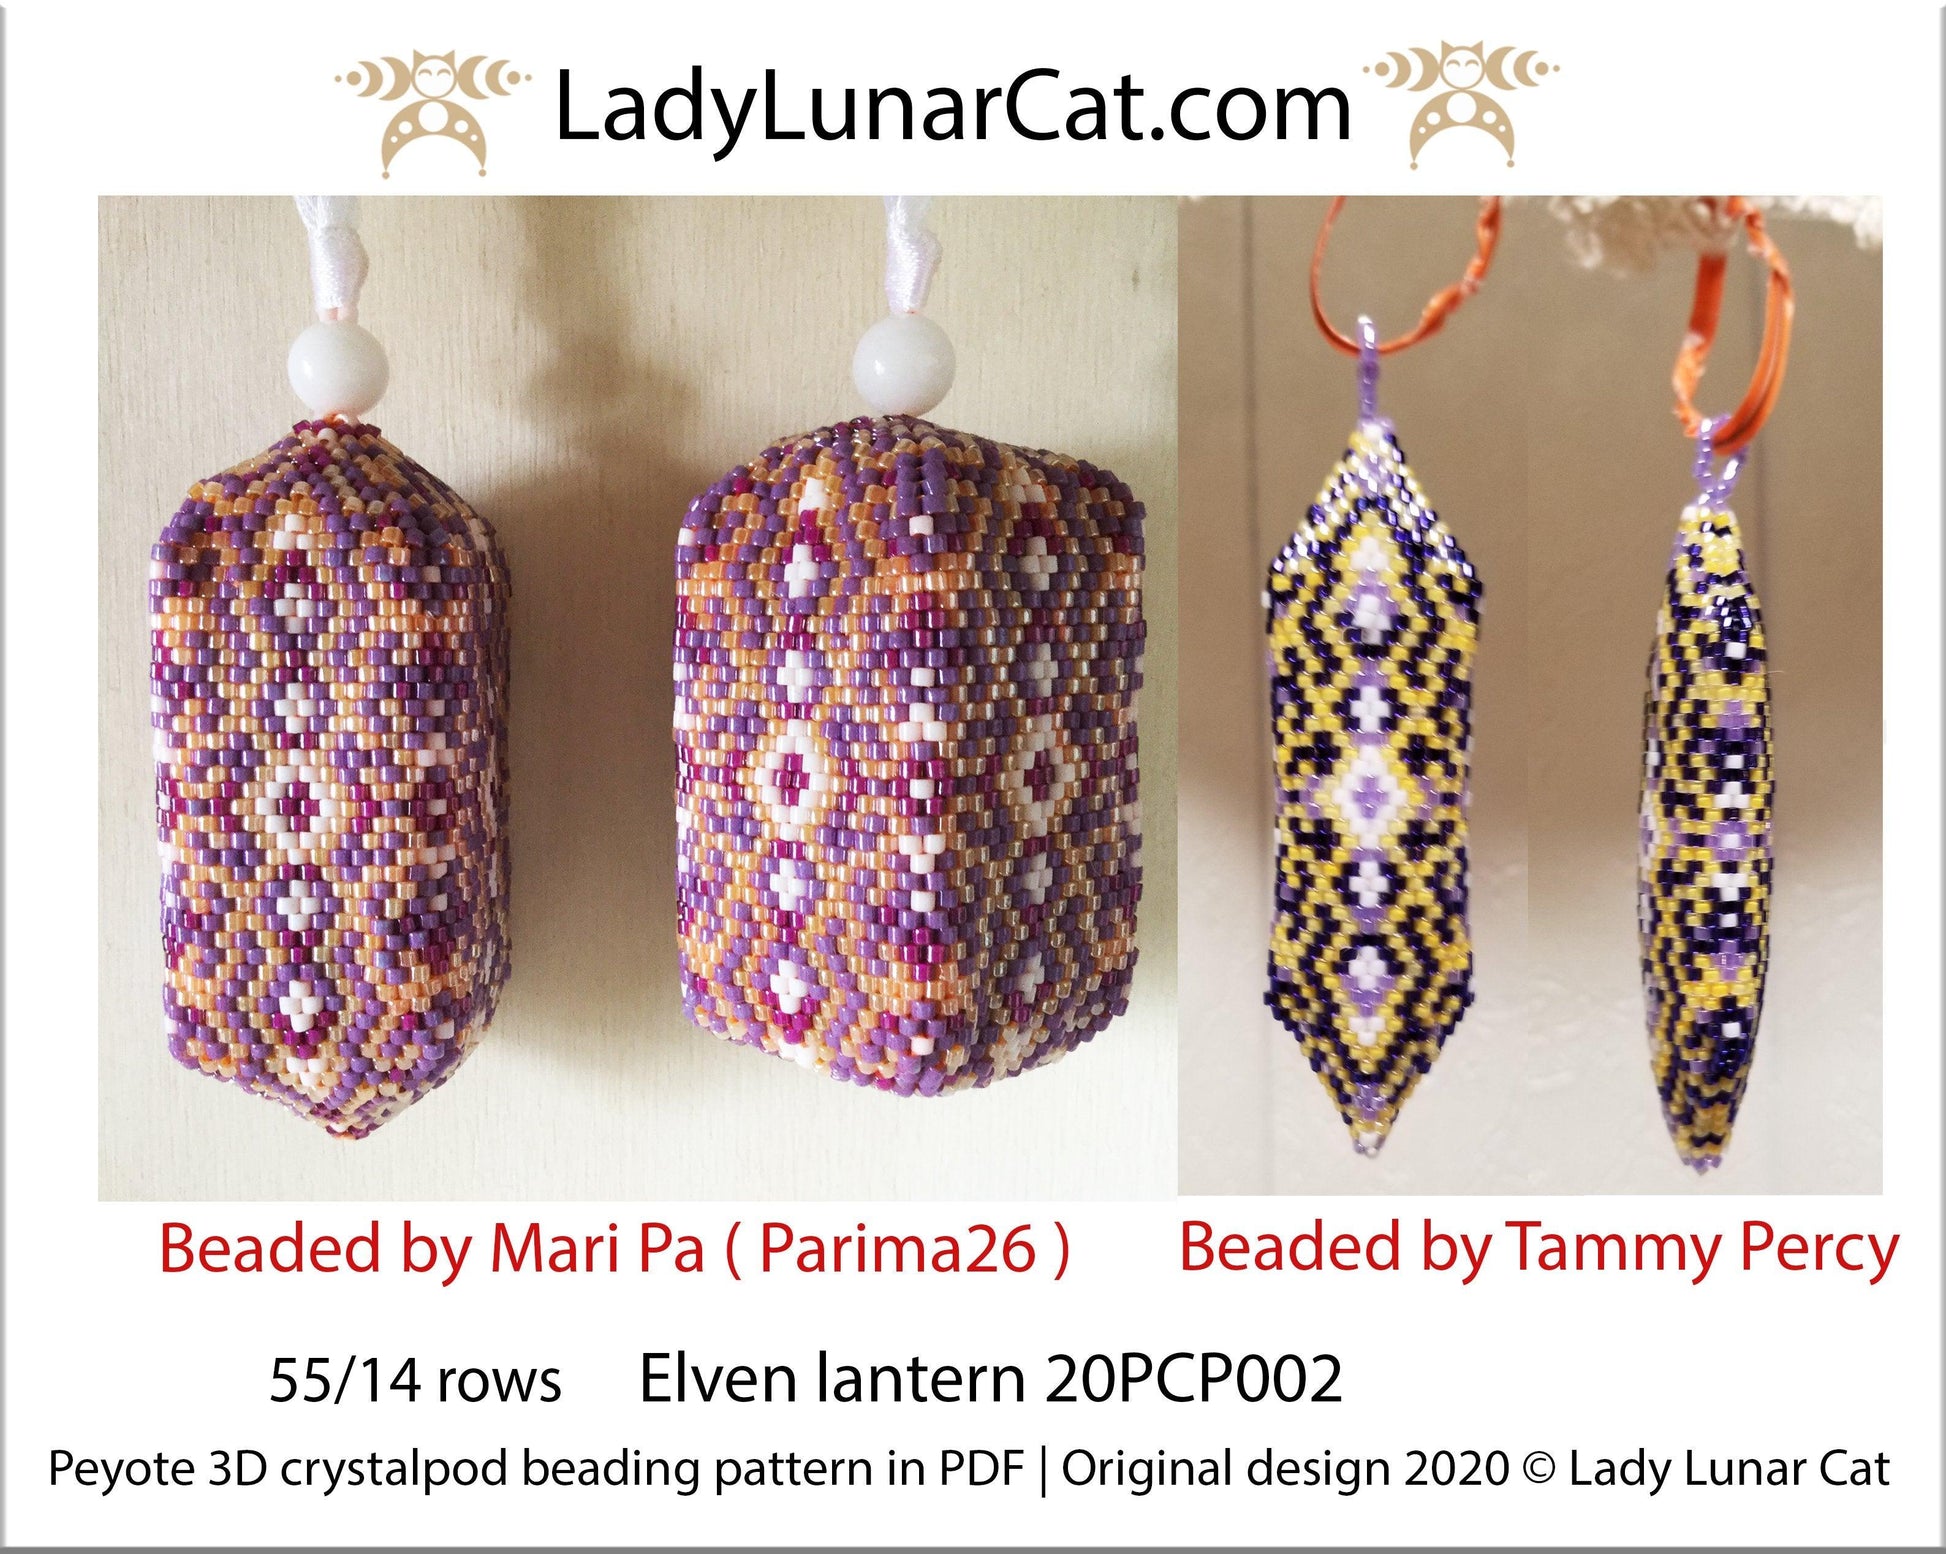 3d peyote pod pattern or crystalpod pattern for beading Elven lantern 20PCP002 LadyLunarCat